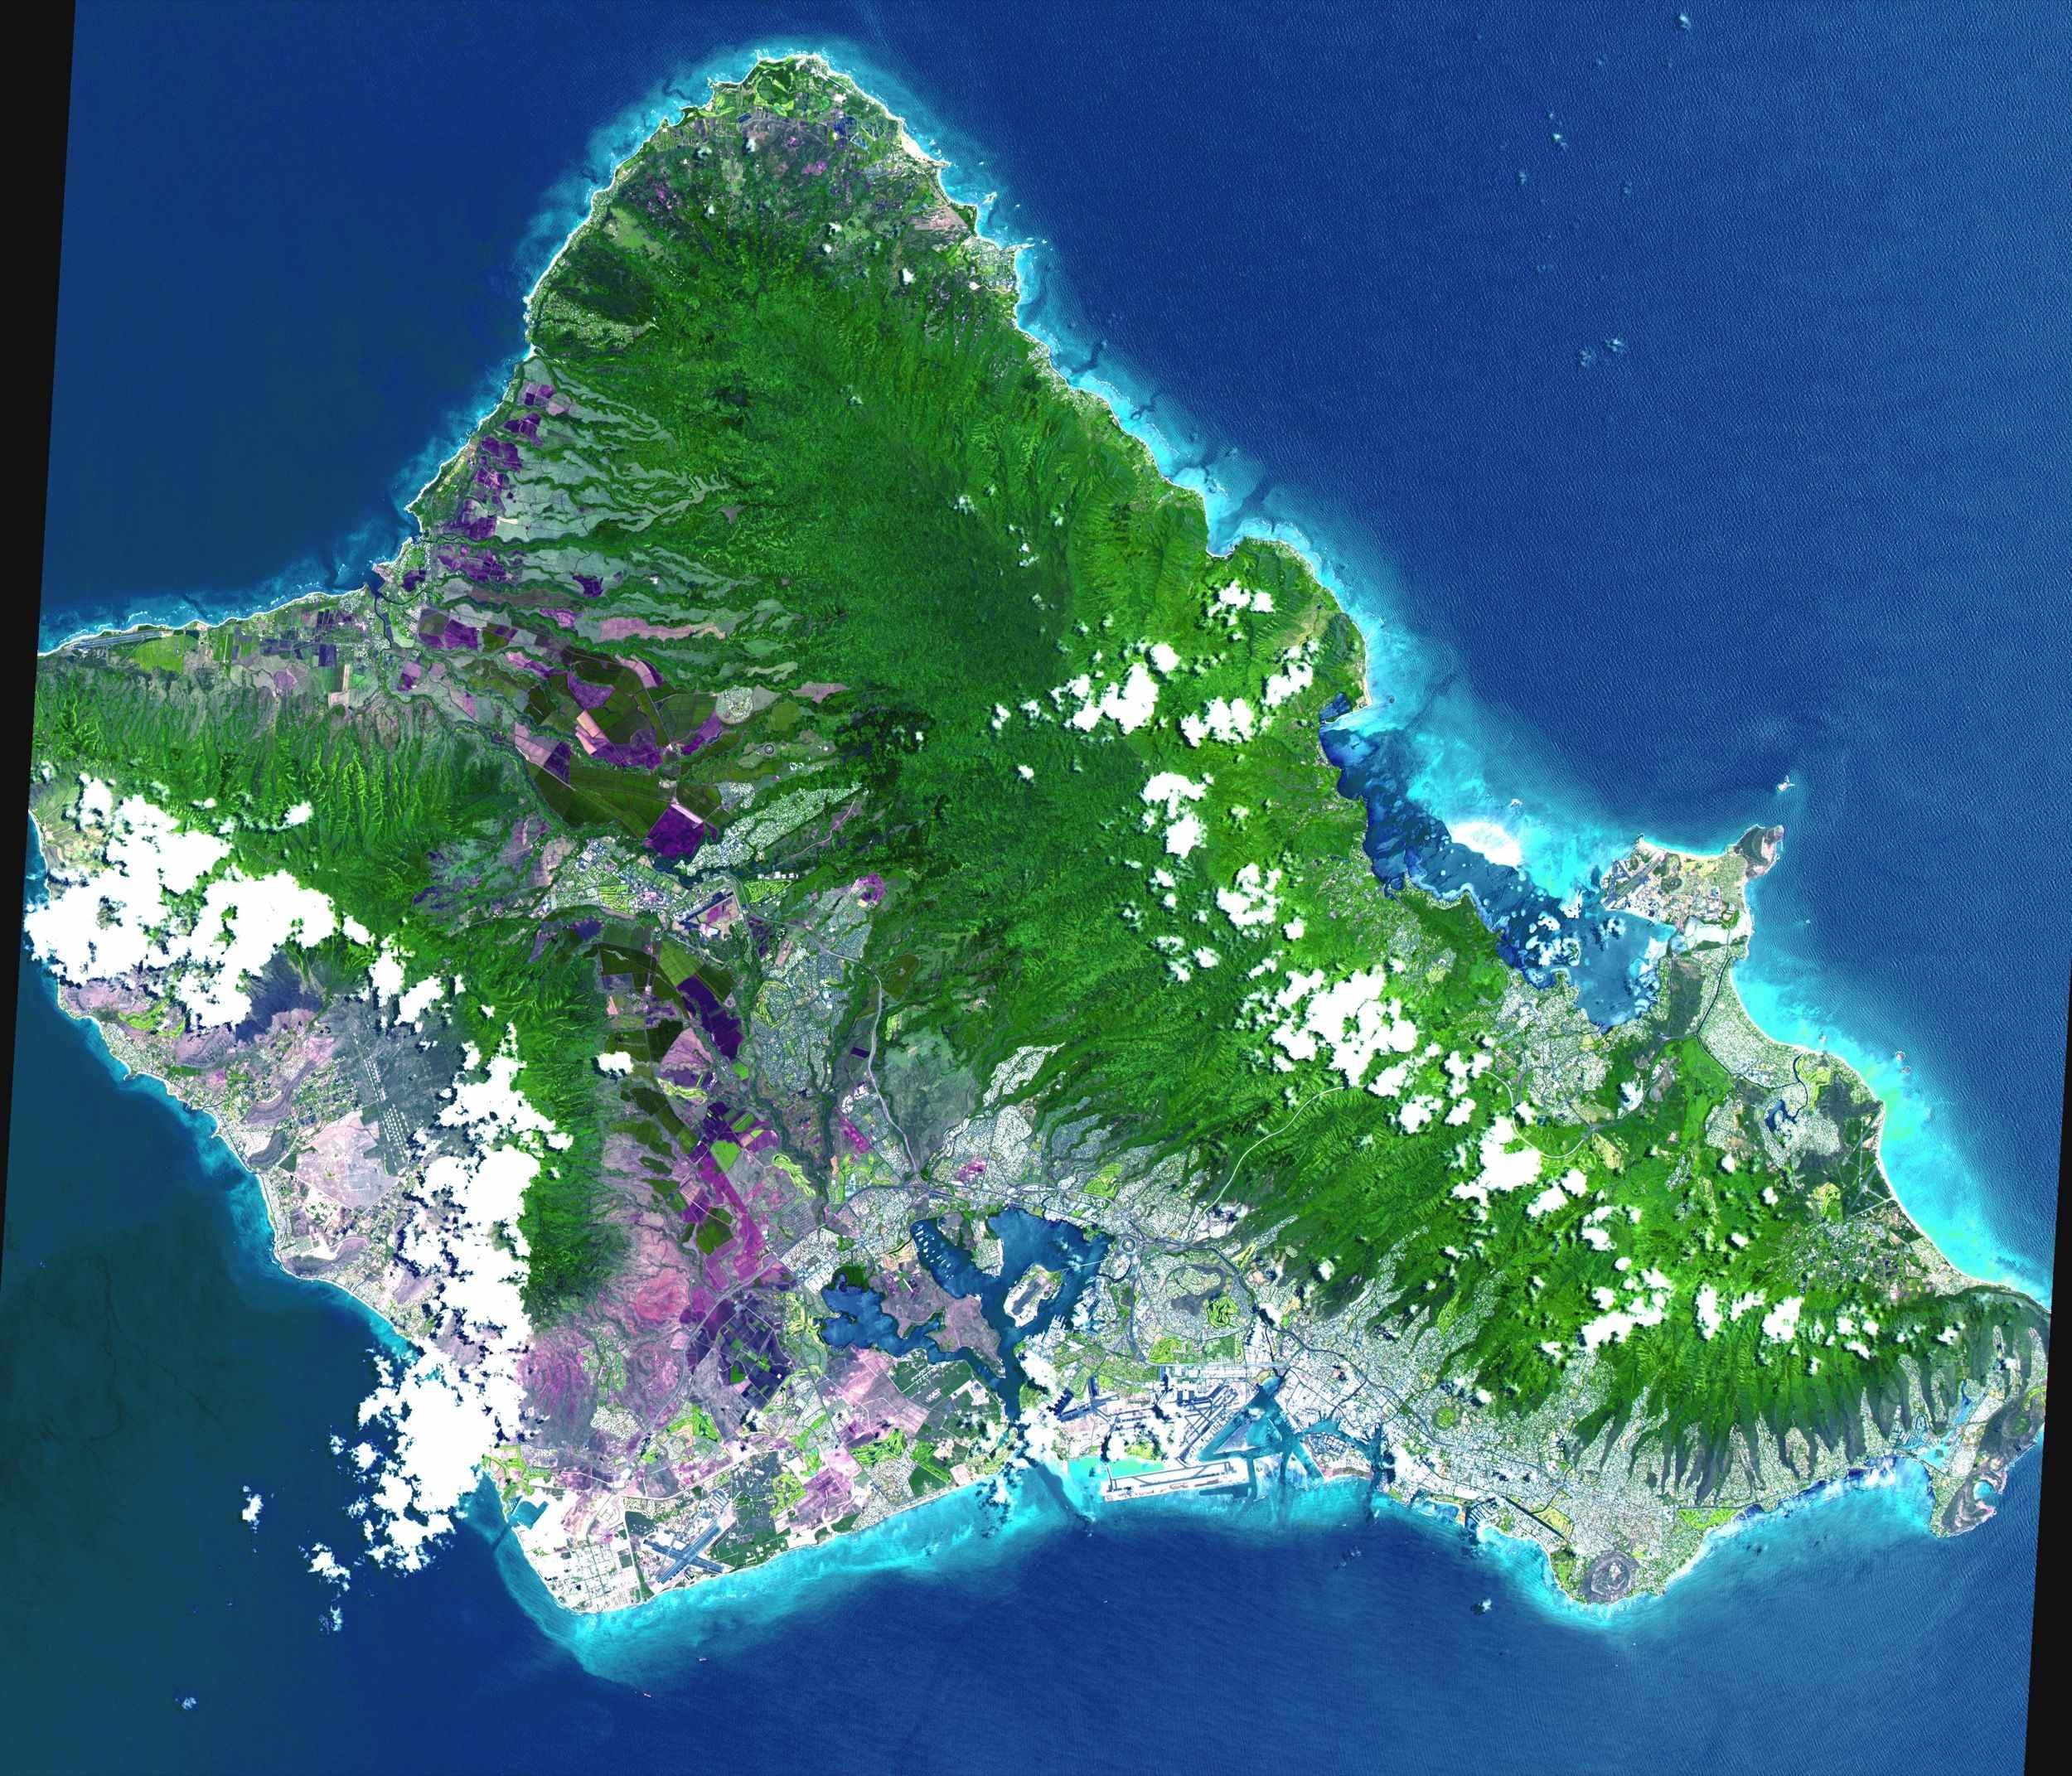 Space Image Oahu Hawaii